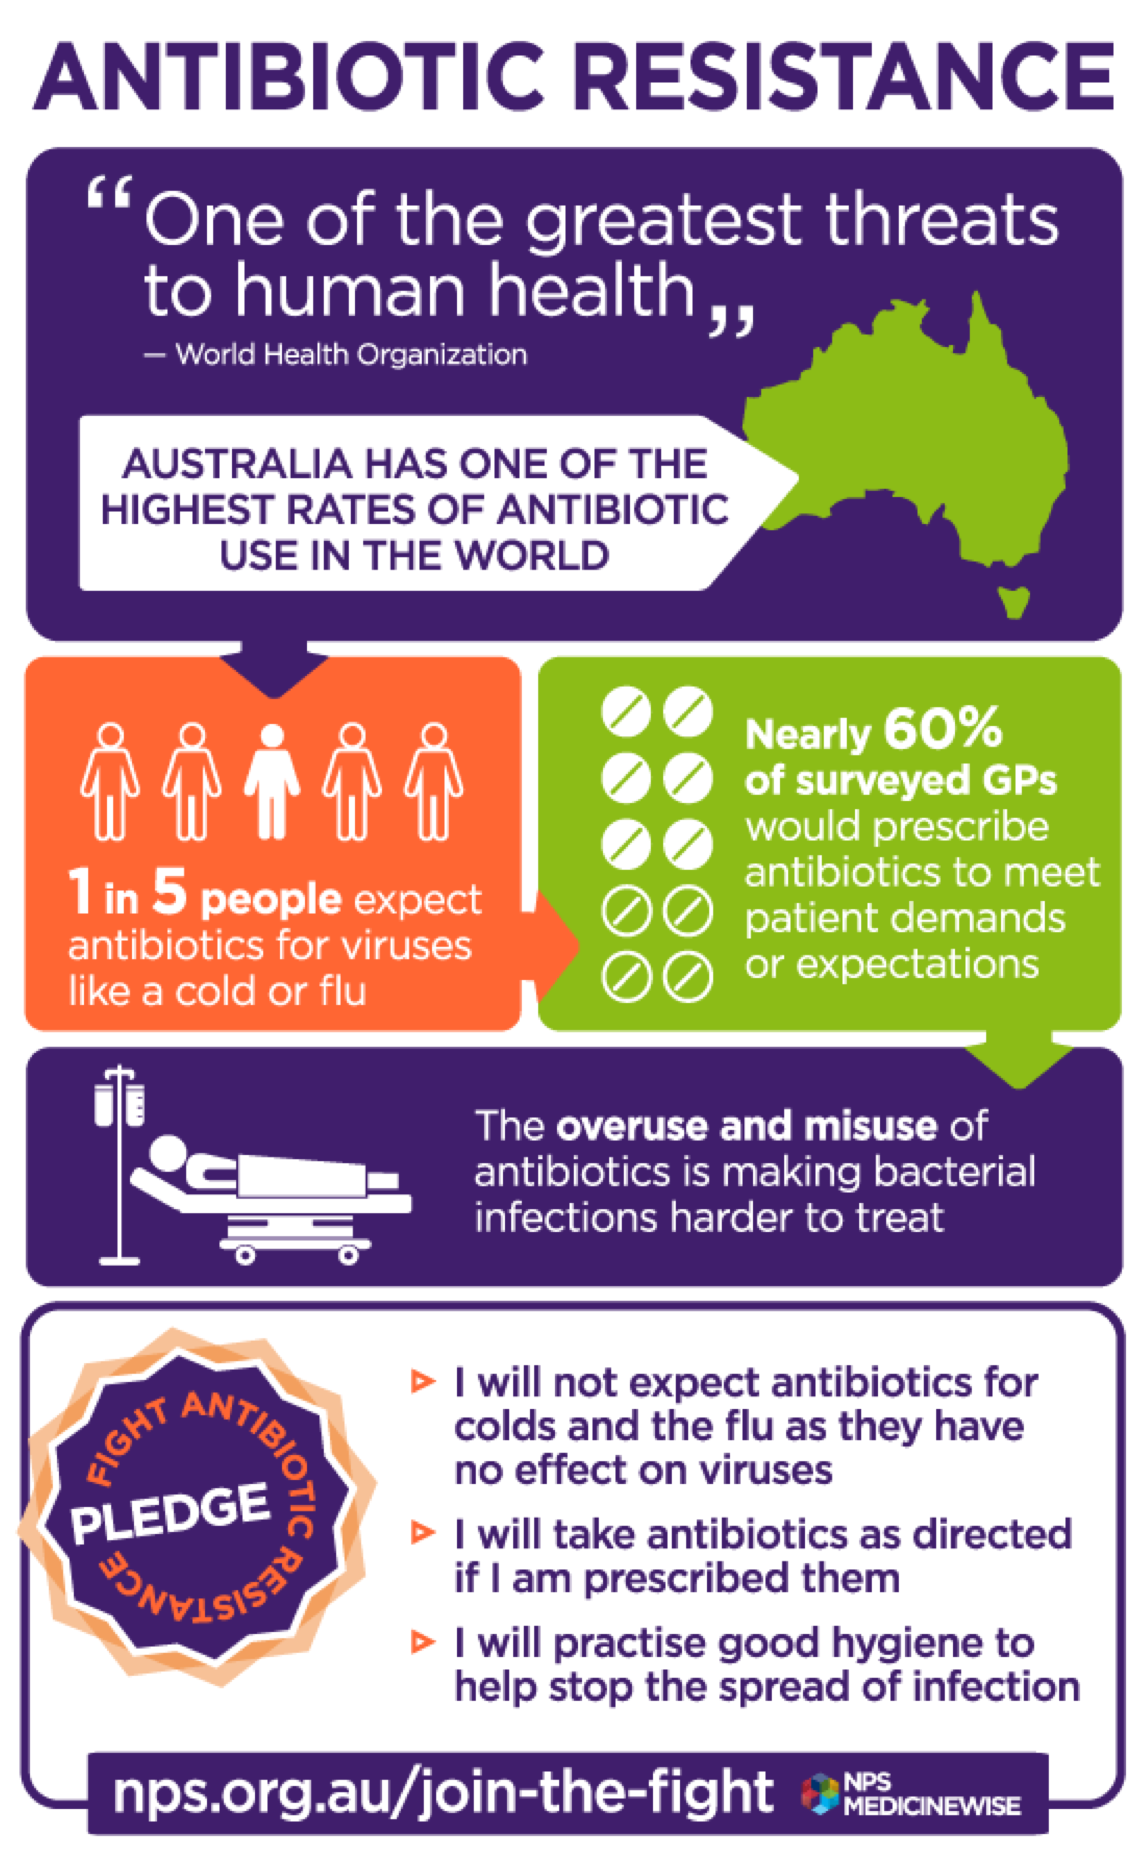 Choosing Wisely Australia Antibiotic Resistance Infographic